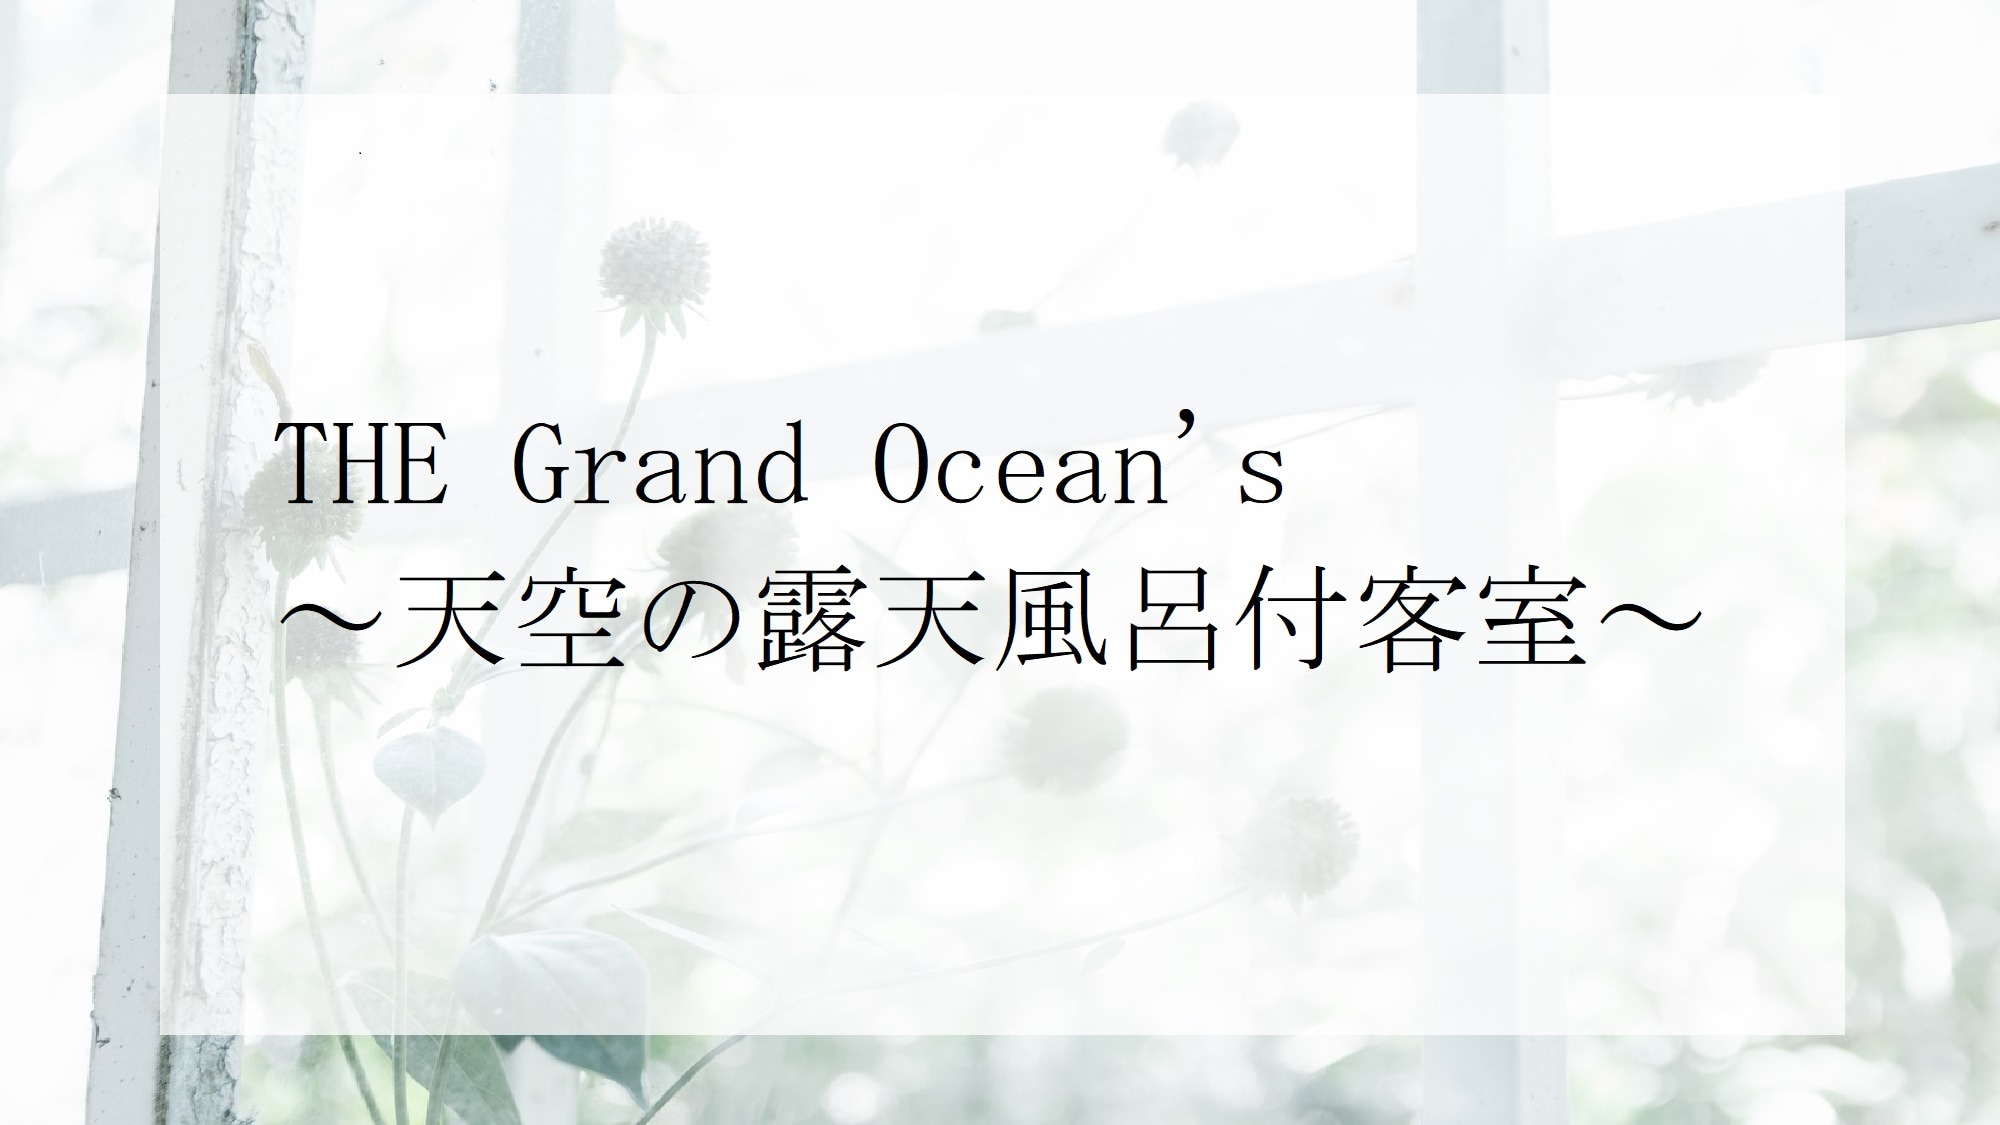 The Grand Ocean’s